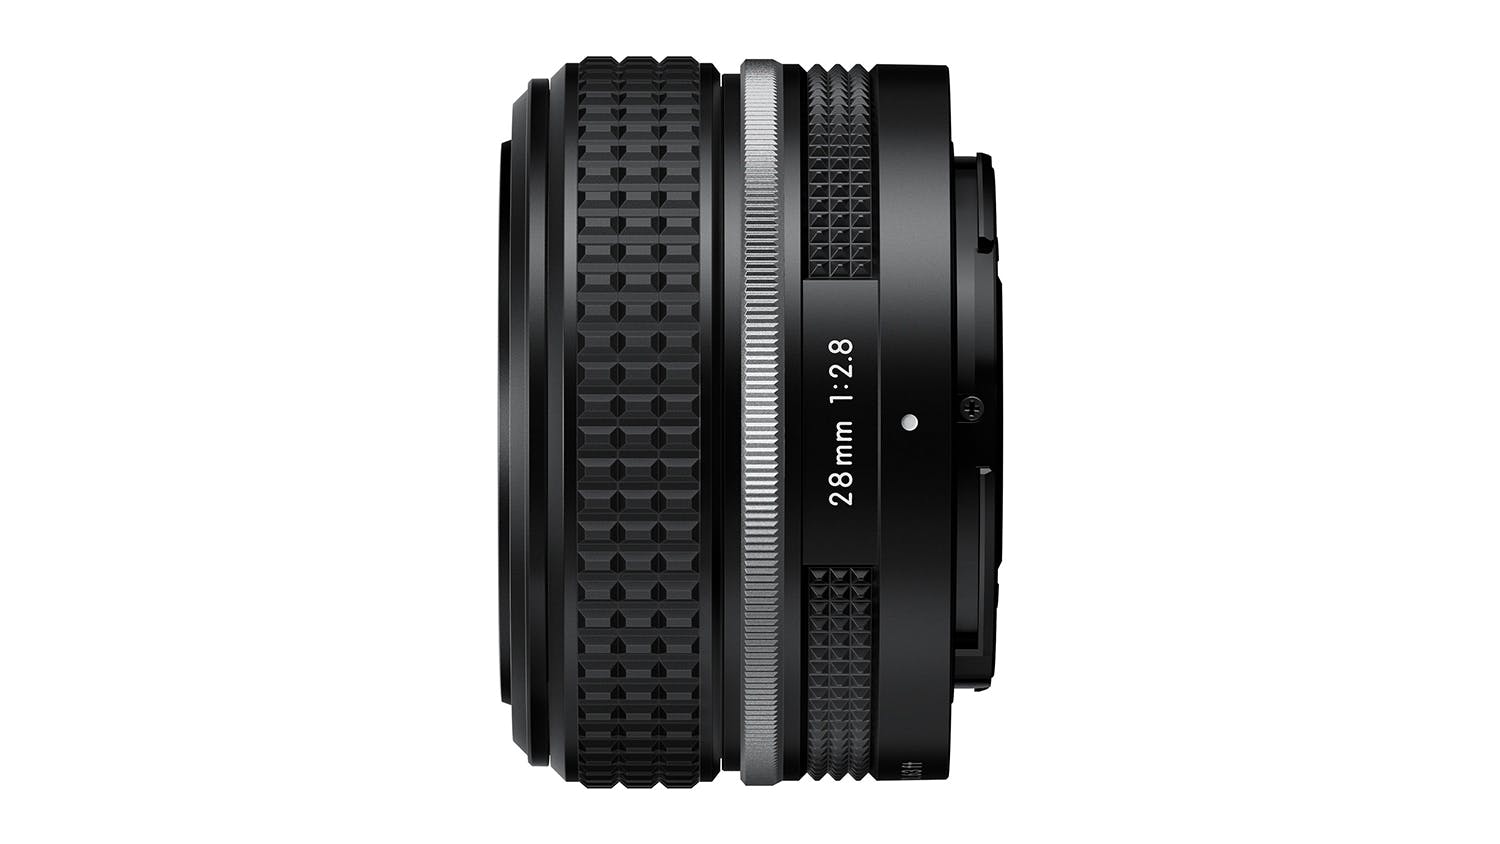 Nikon Nikkor Z 28mm f/2.8 SE Wide Prime Lens